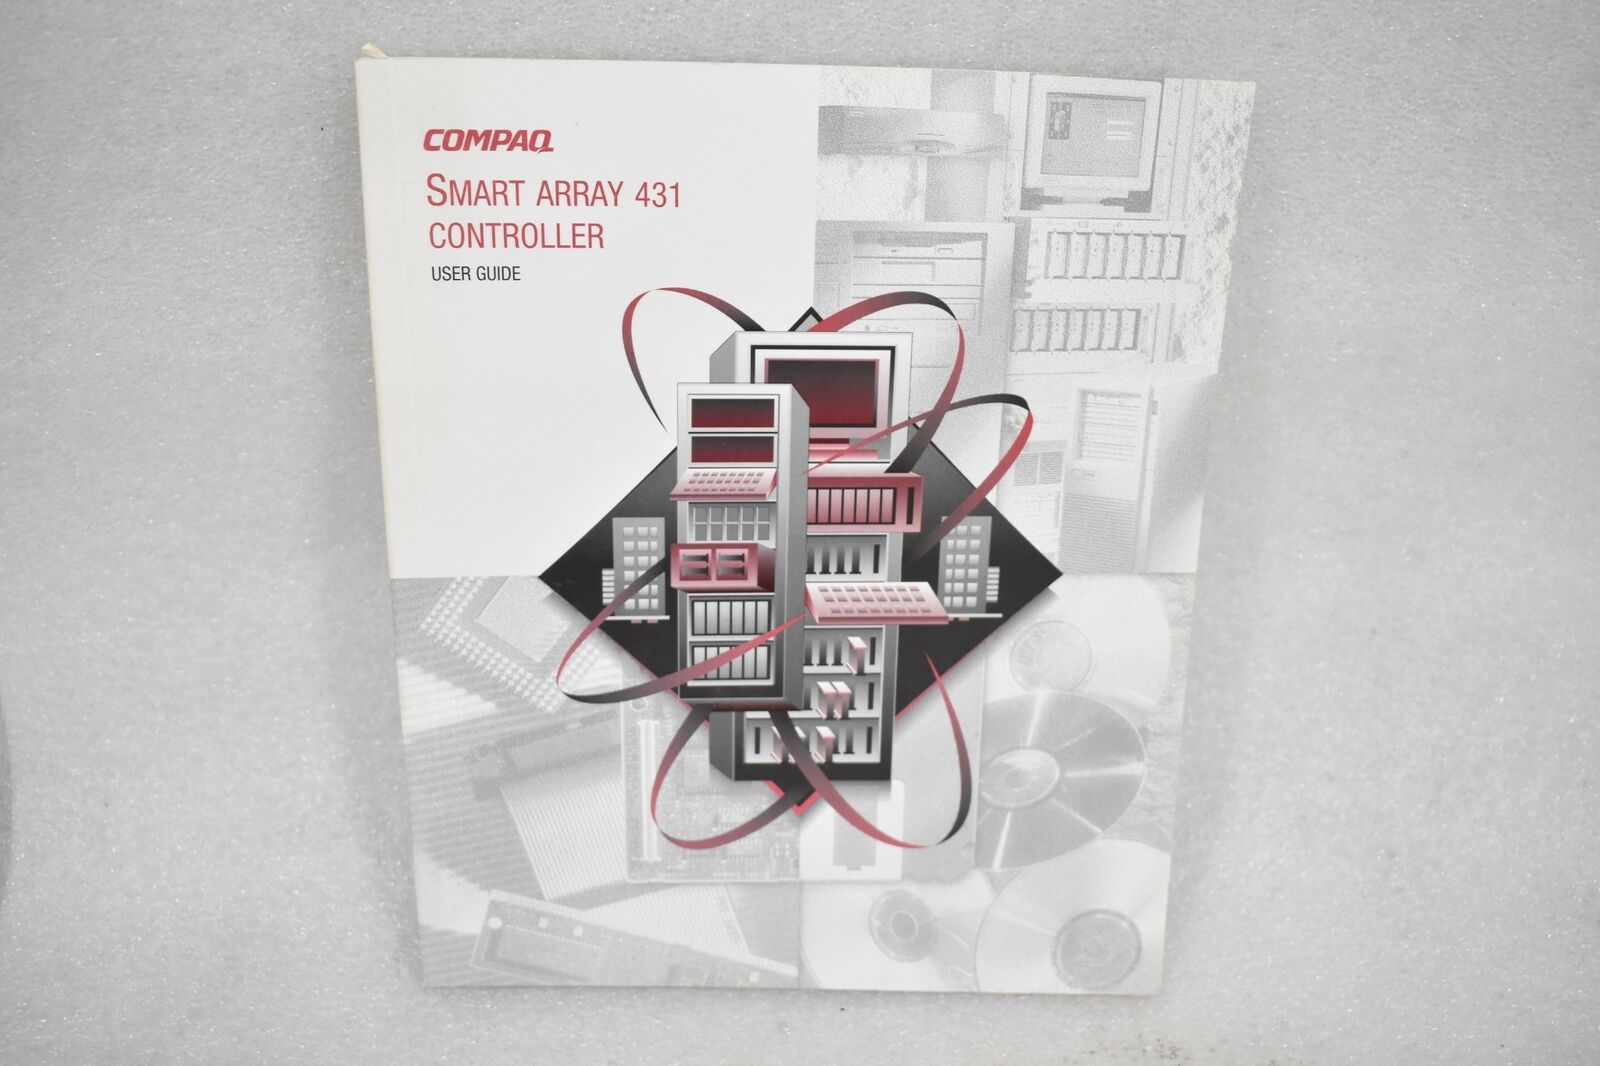 COMPAQ SMART ARRAY 431 CONTROLLER USER GUIDE 146915-001